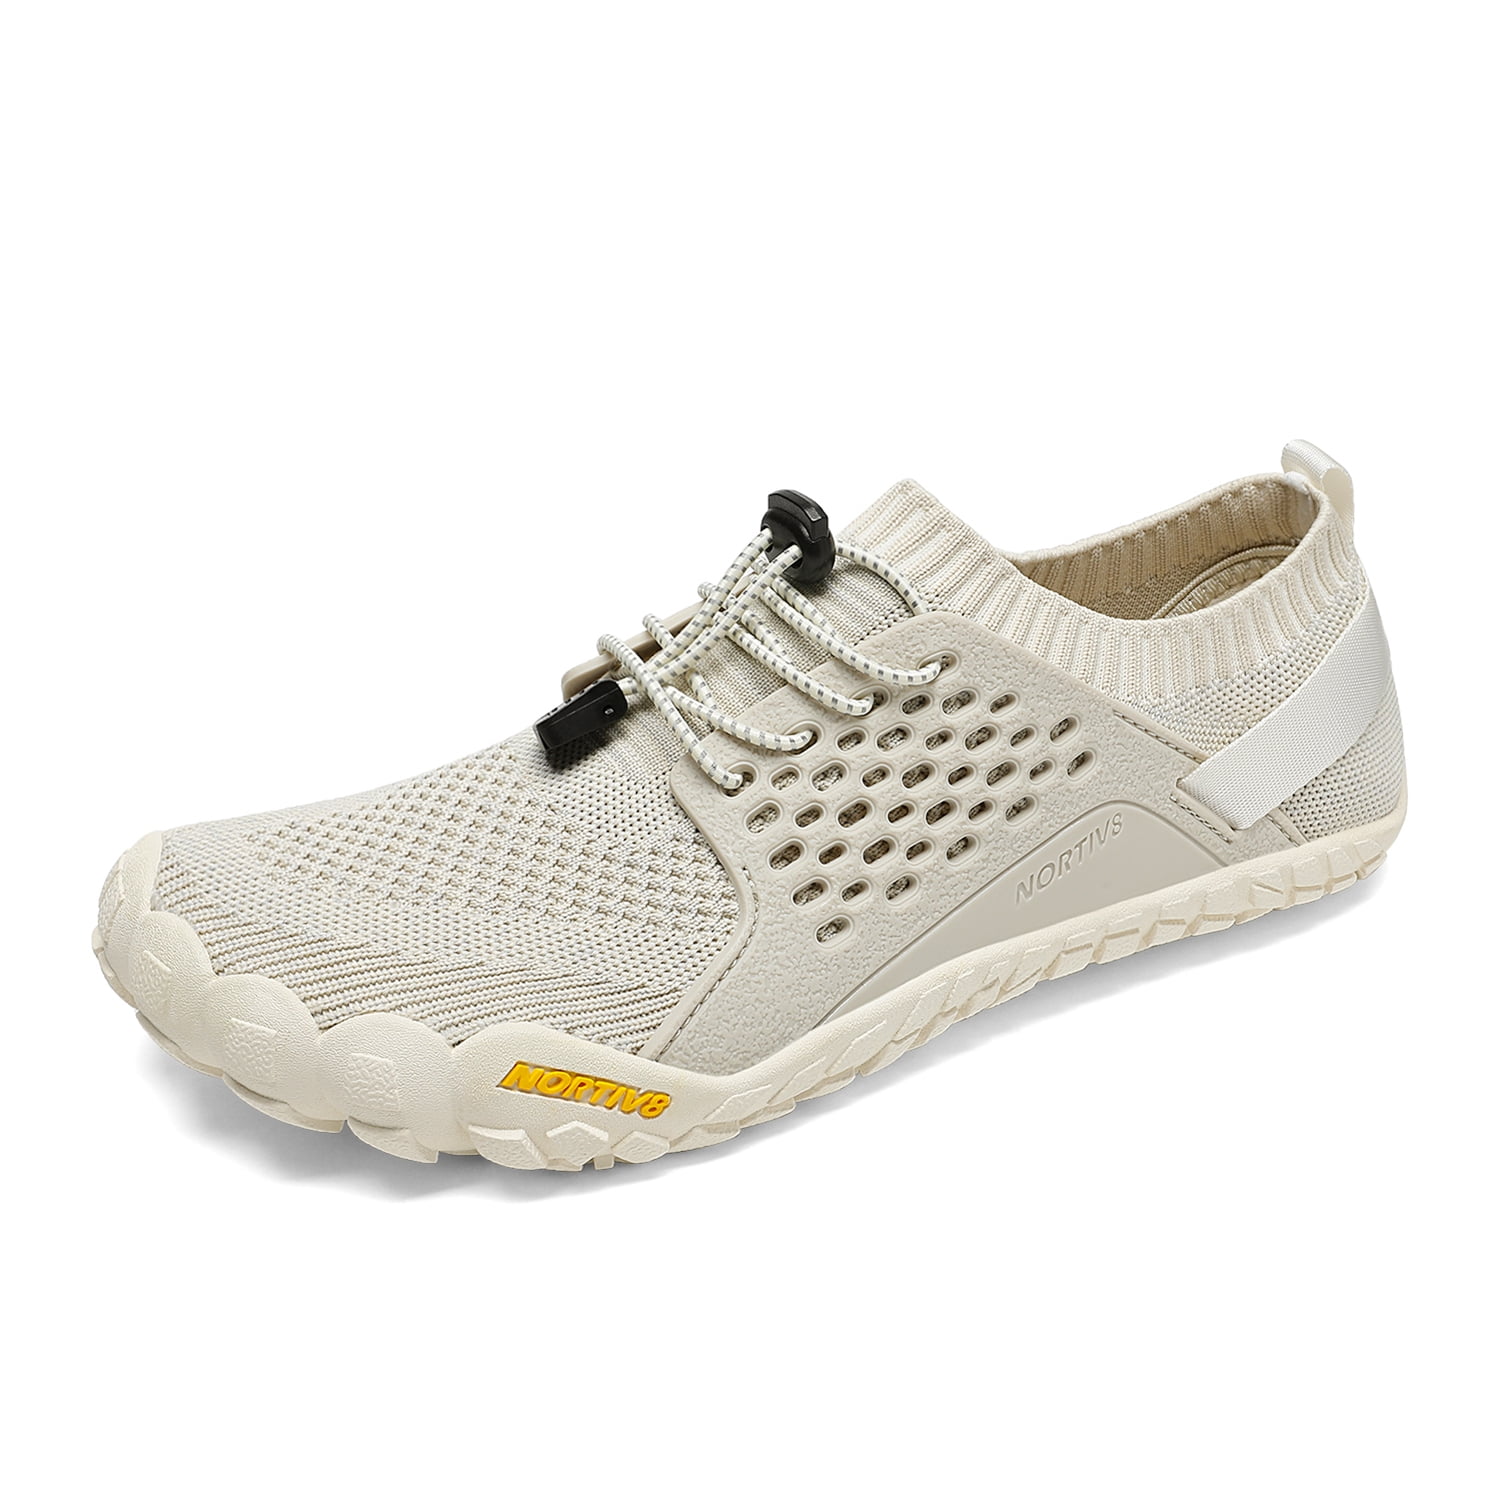 NORTIV 8 Men's Barefoot Water Shoes Quick Dry Aqua Socks TREKMAN-2